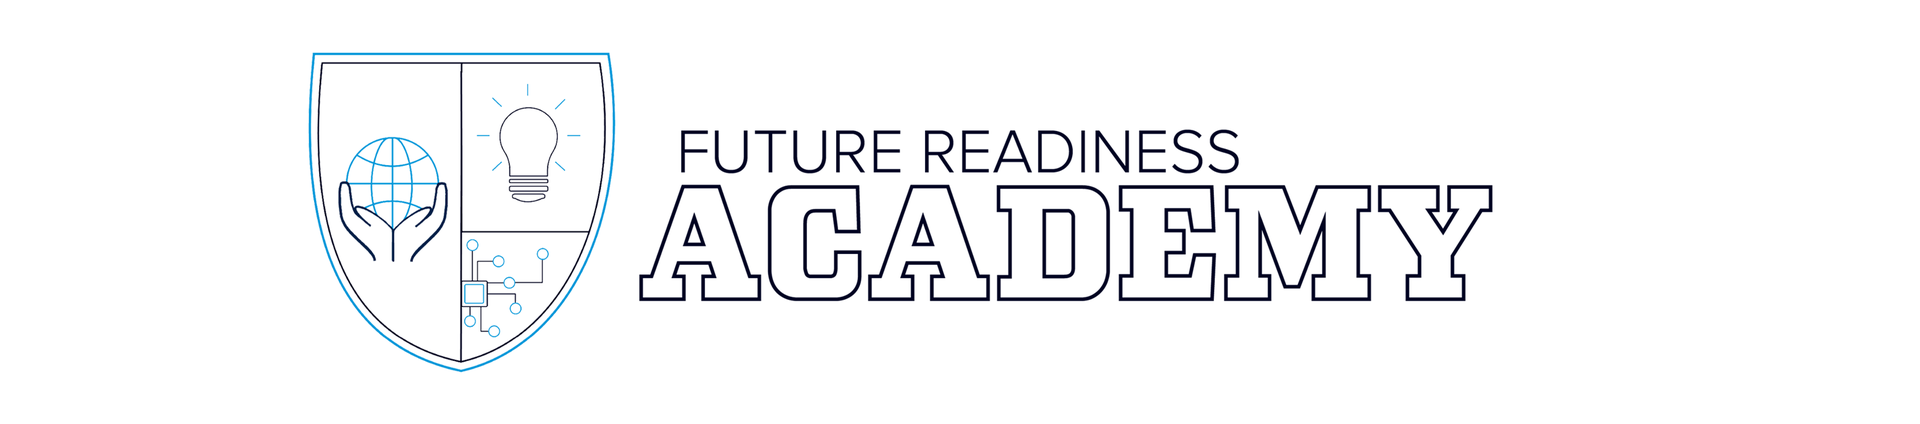 Future Readiness Academy